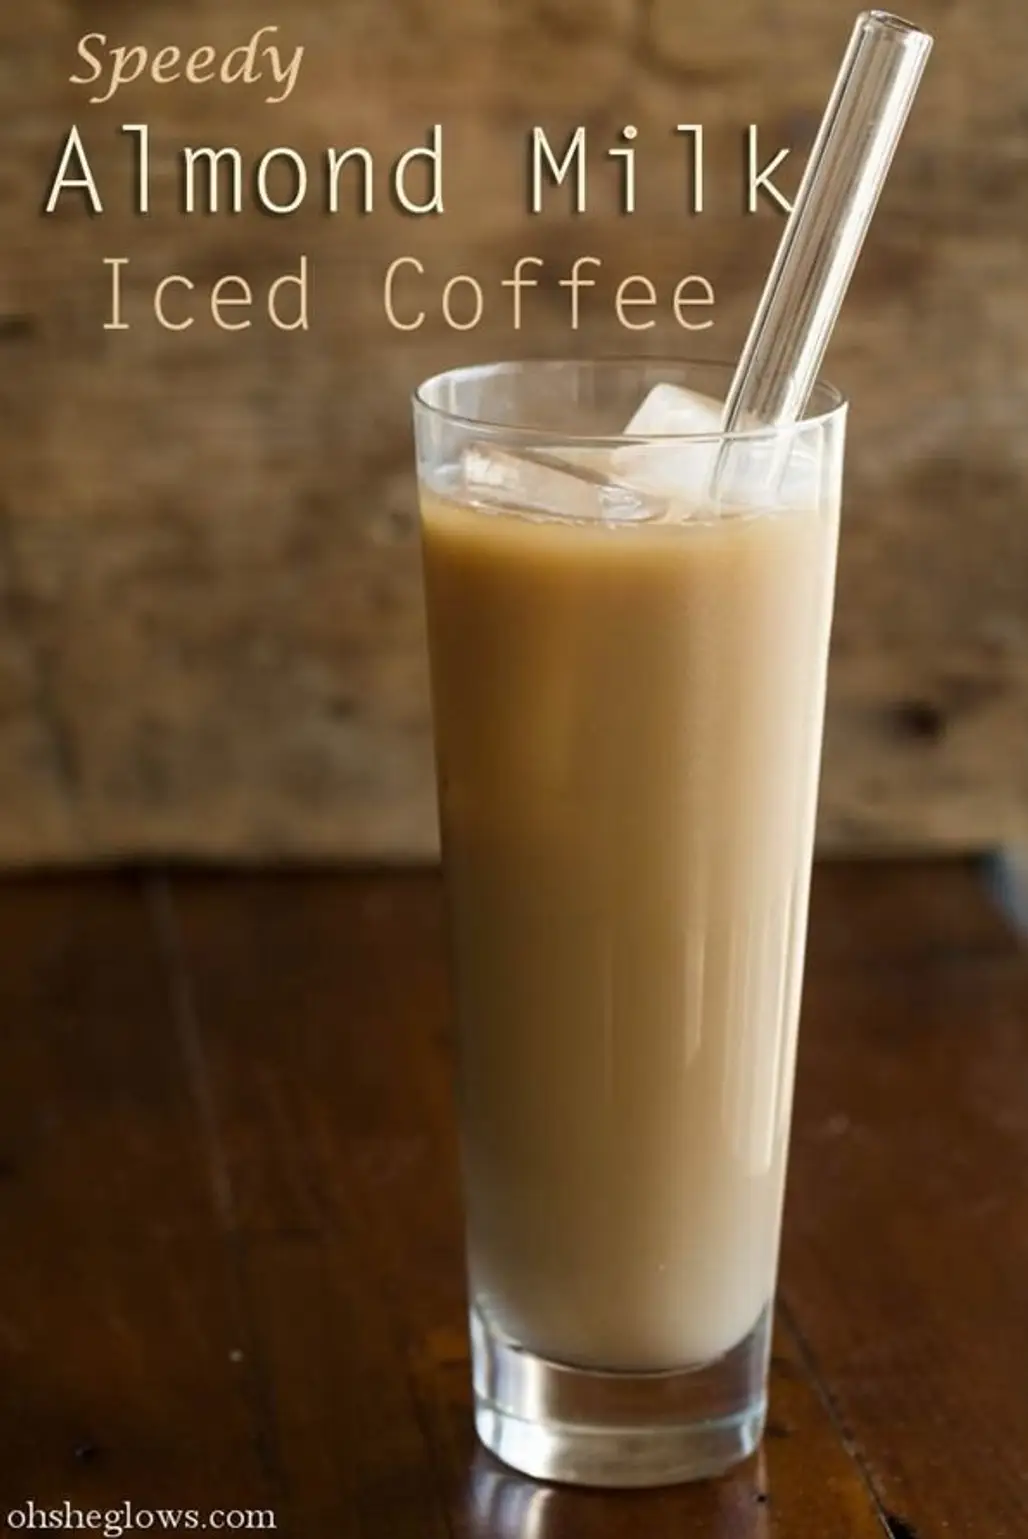 Speedy Almond Milk Iced Coffee